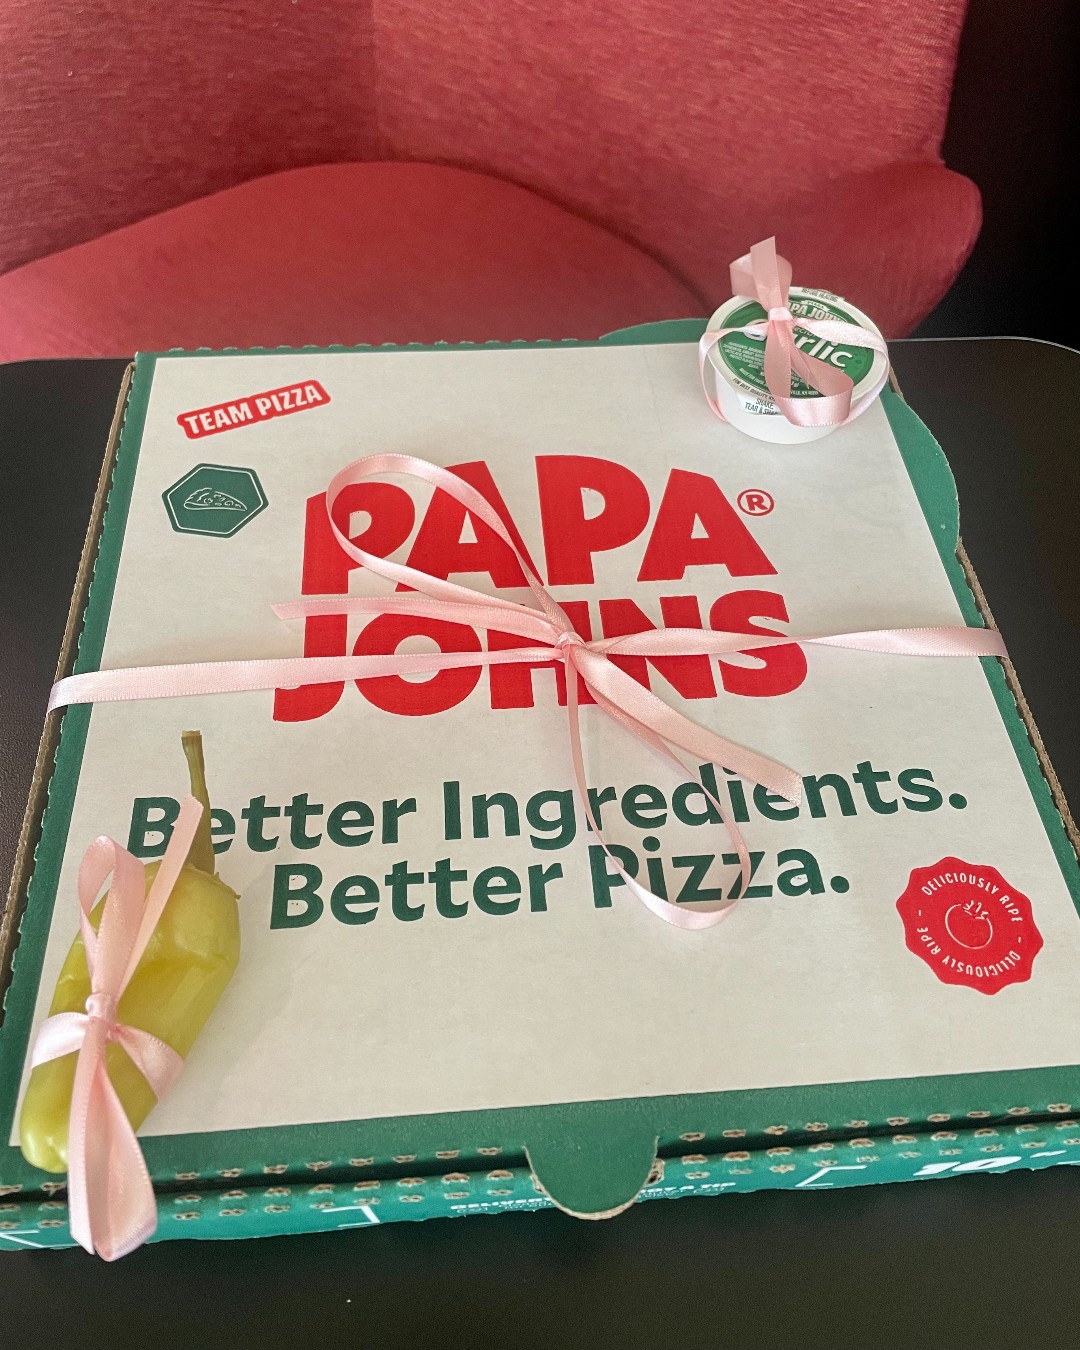 Papa's Bakeria: Top 40th Special Recipes by JohnG15 on DeviantArt